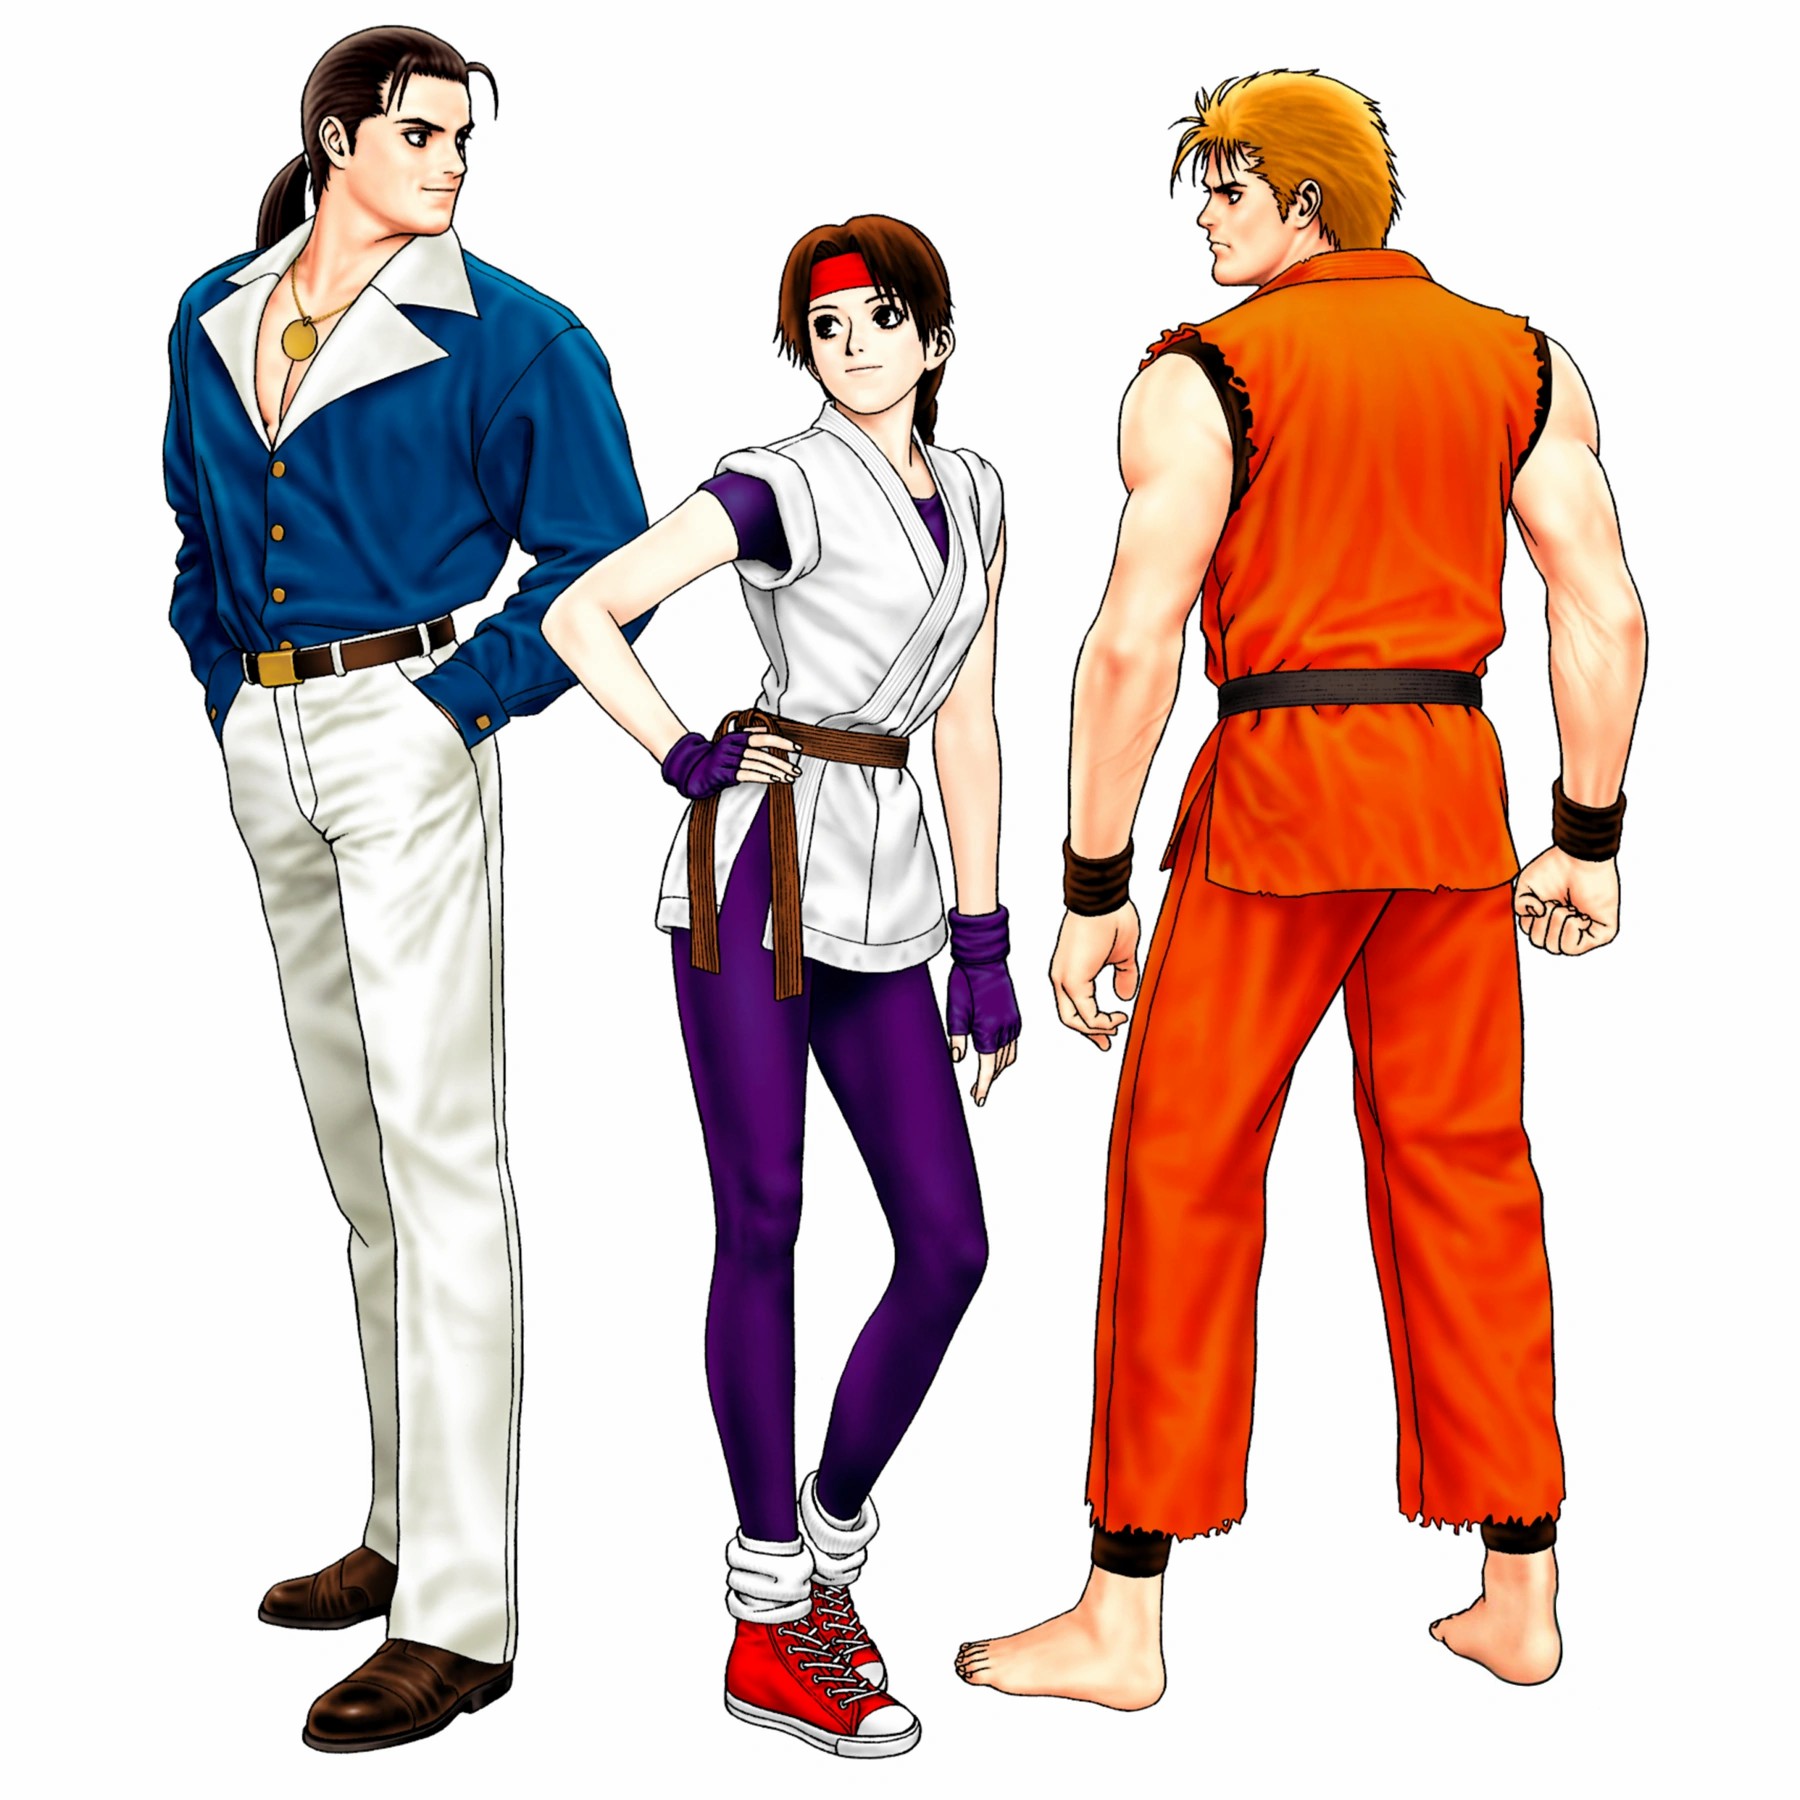 Ryo Sakazaki - Characters & Art - The King of Fighters 2002